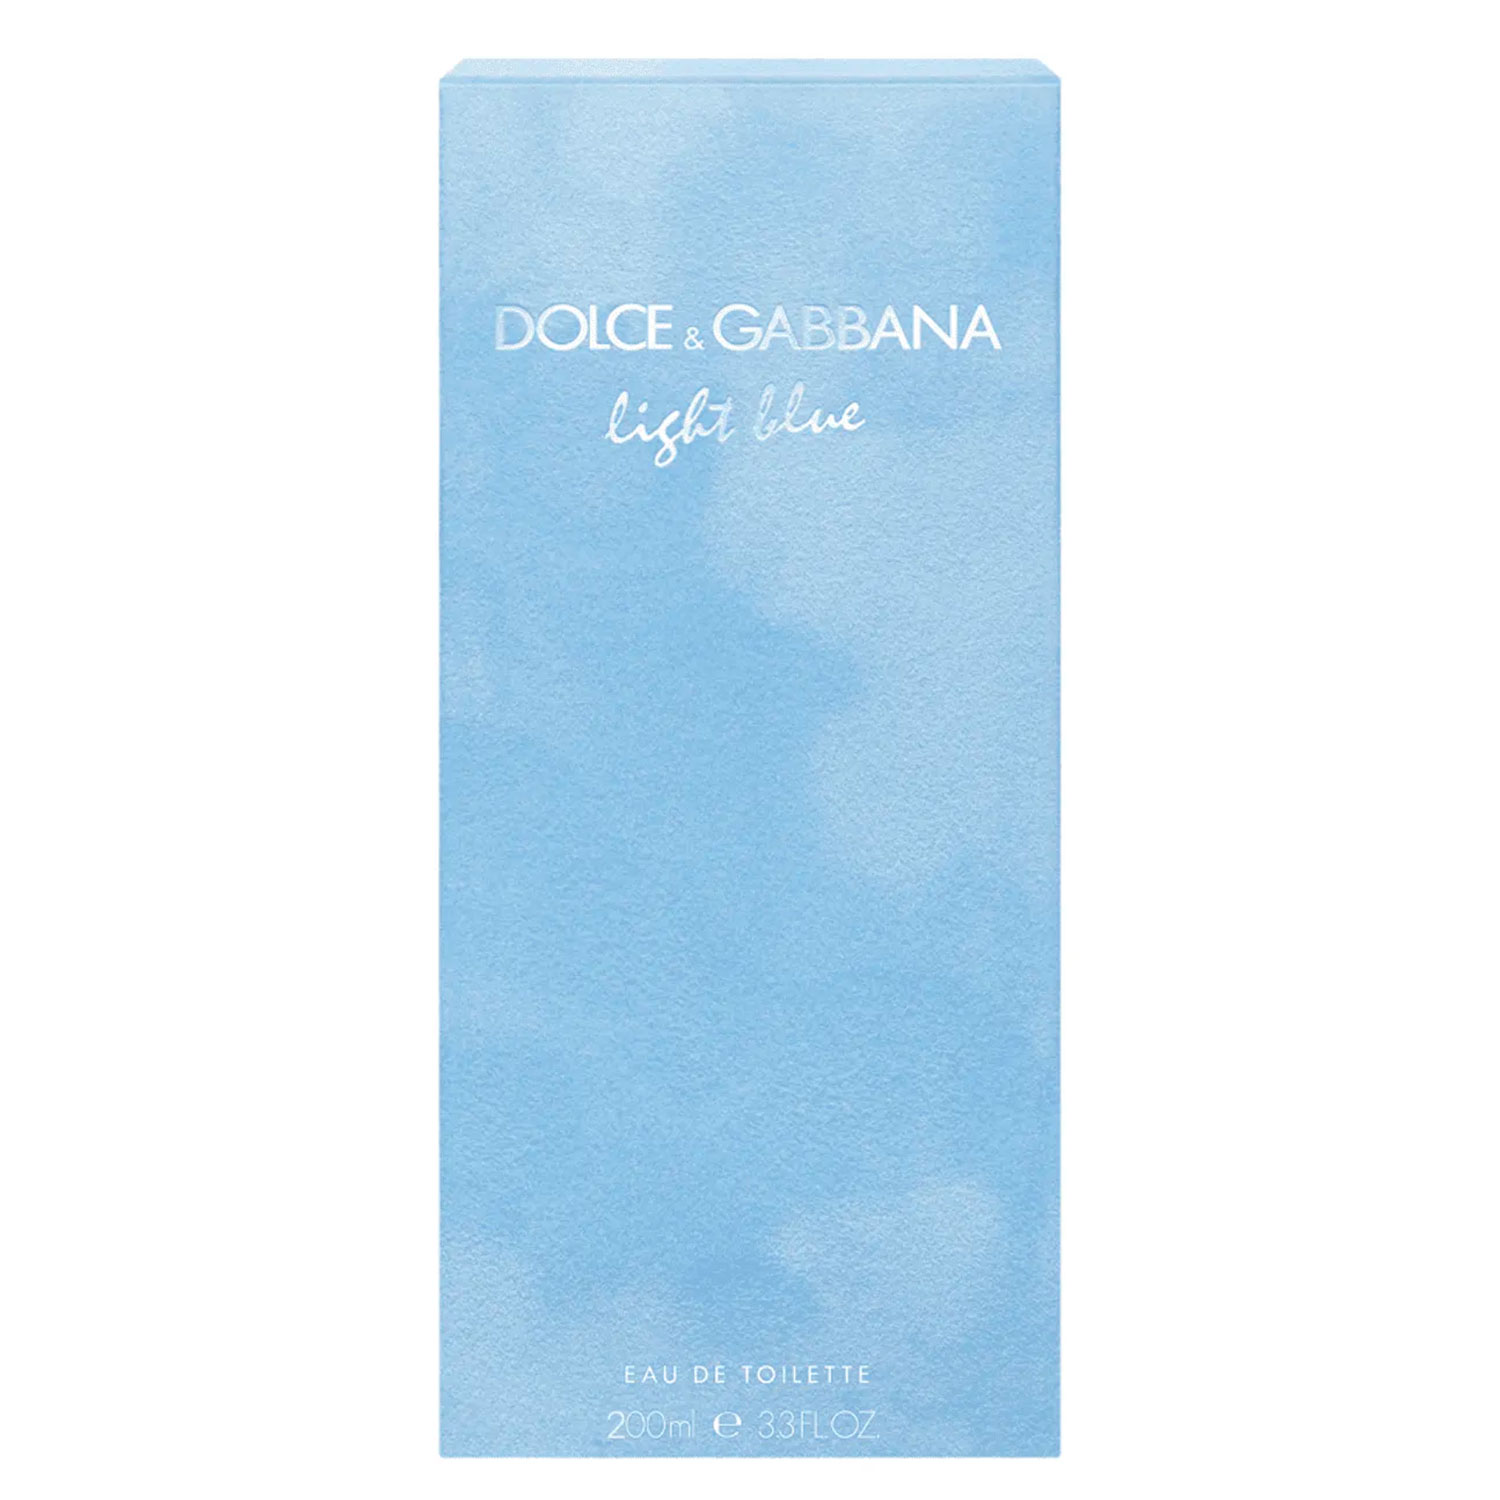 Perfume Dolce Gabbana Light Blue Eau de Toilette Feminino 200ml